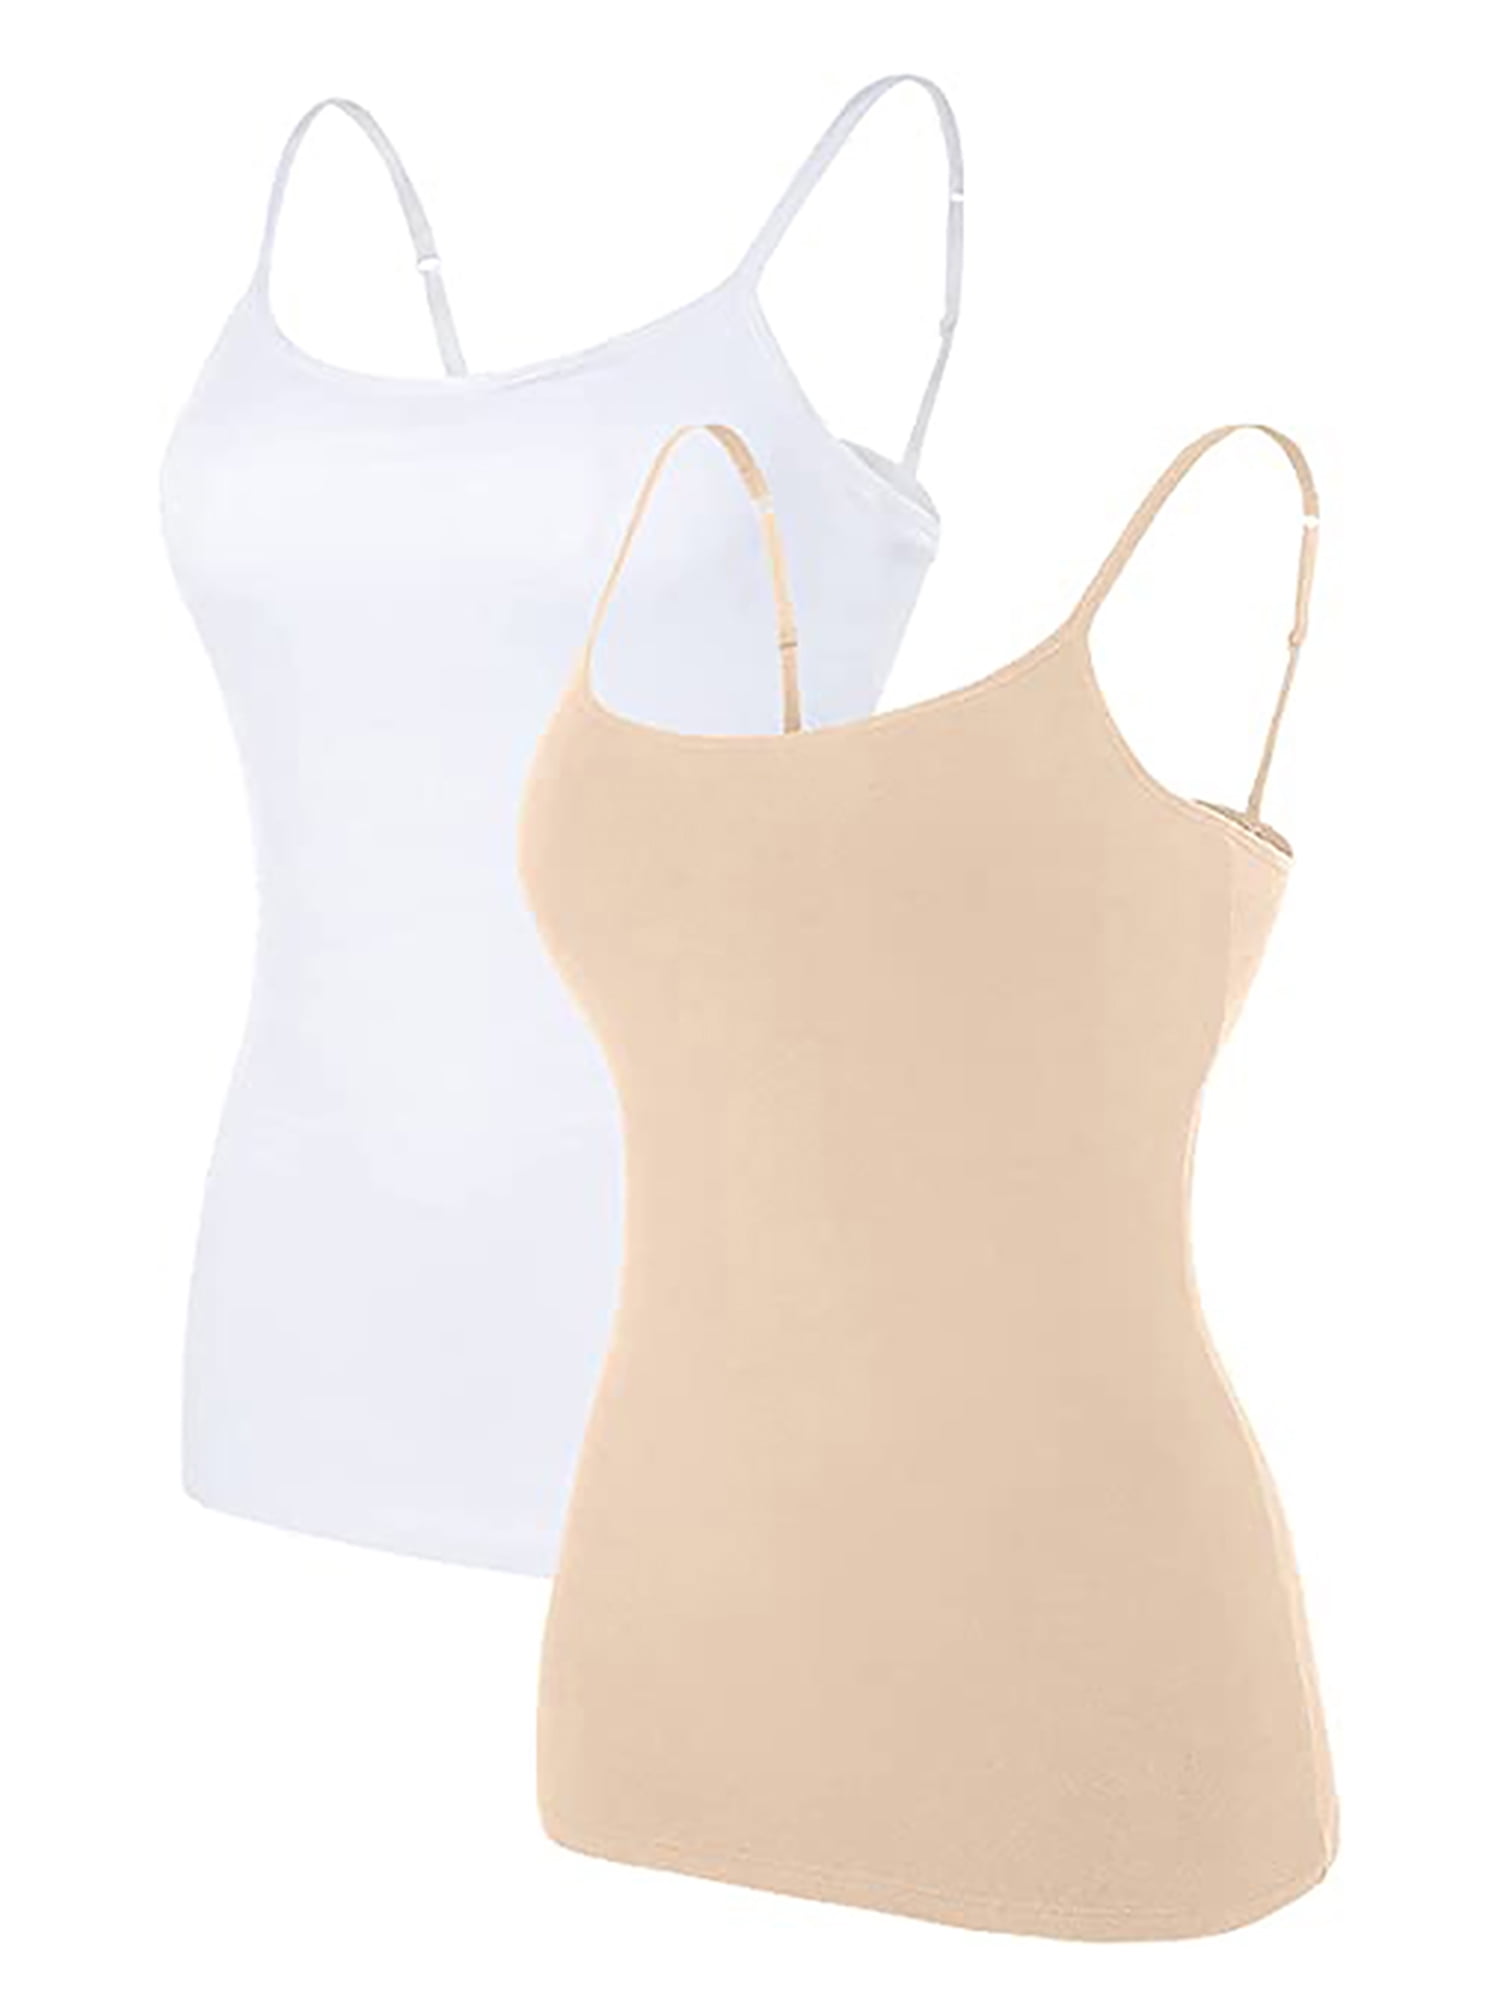 Women's Camisole Cotton Tank Top with Shelf Bra Adjustable Wide Strap Basic  Undershirt